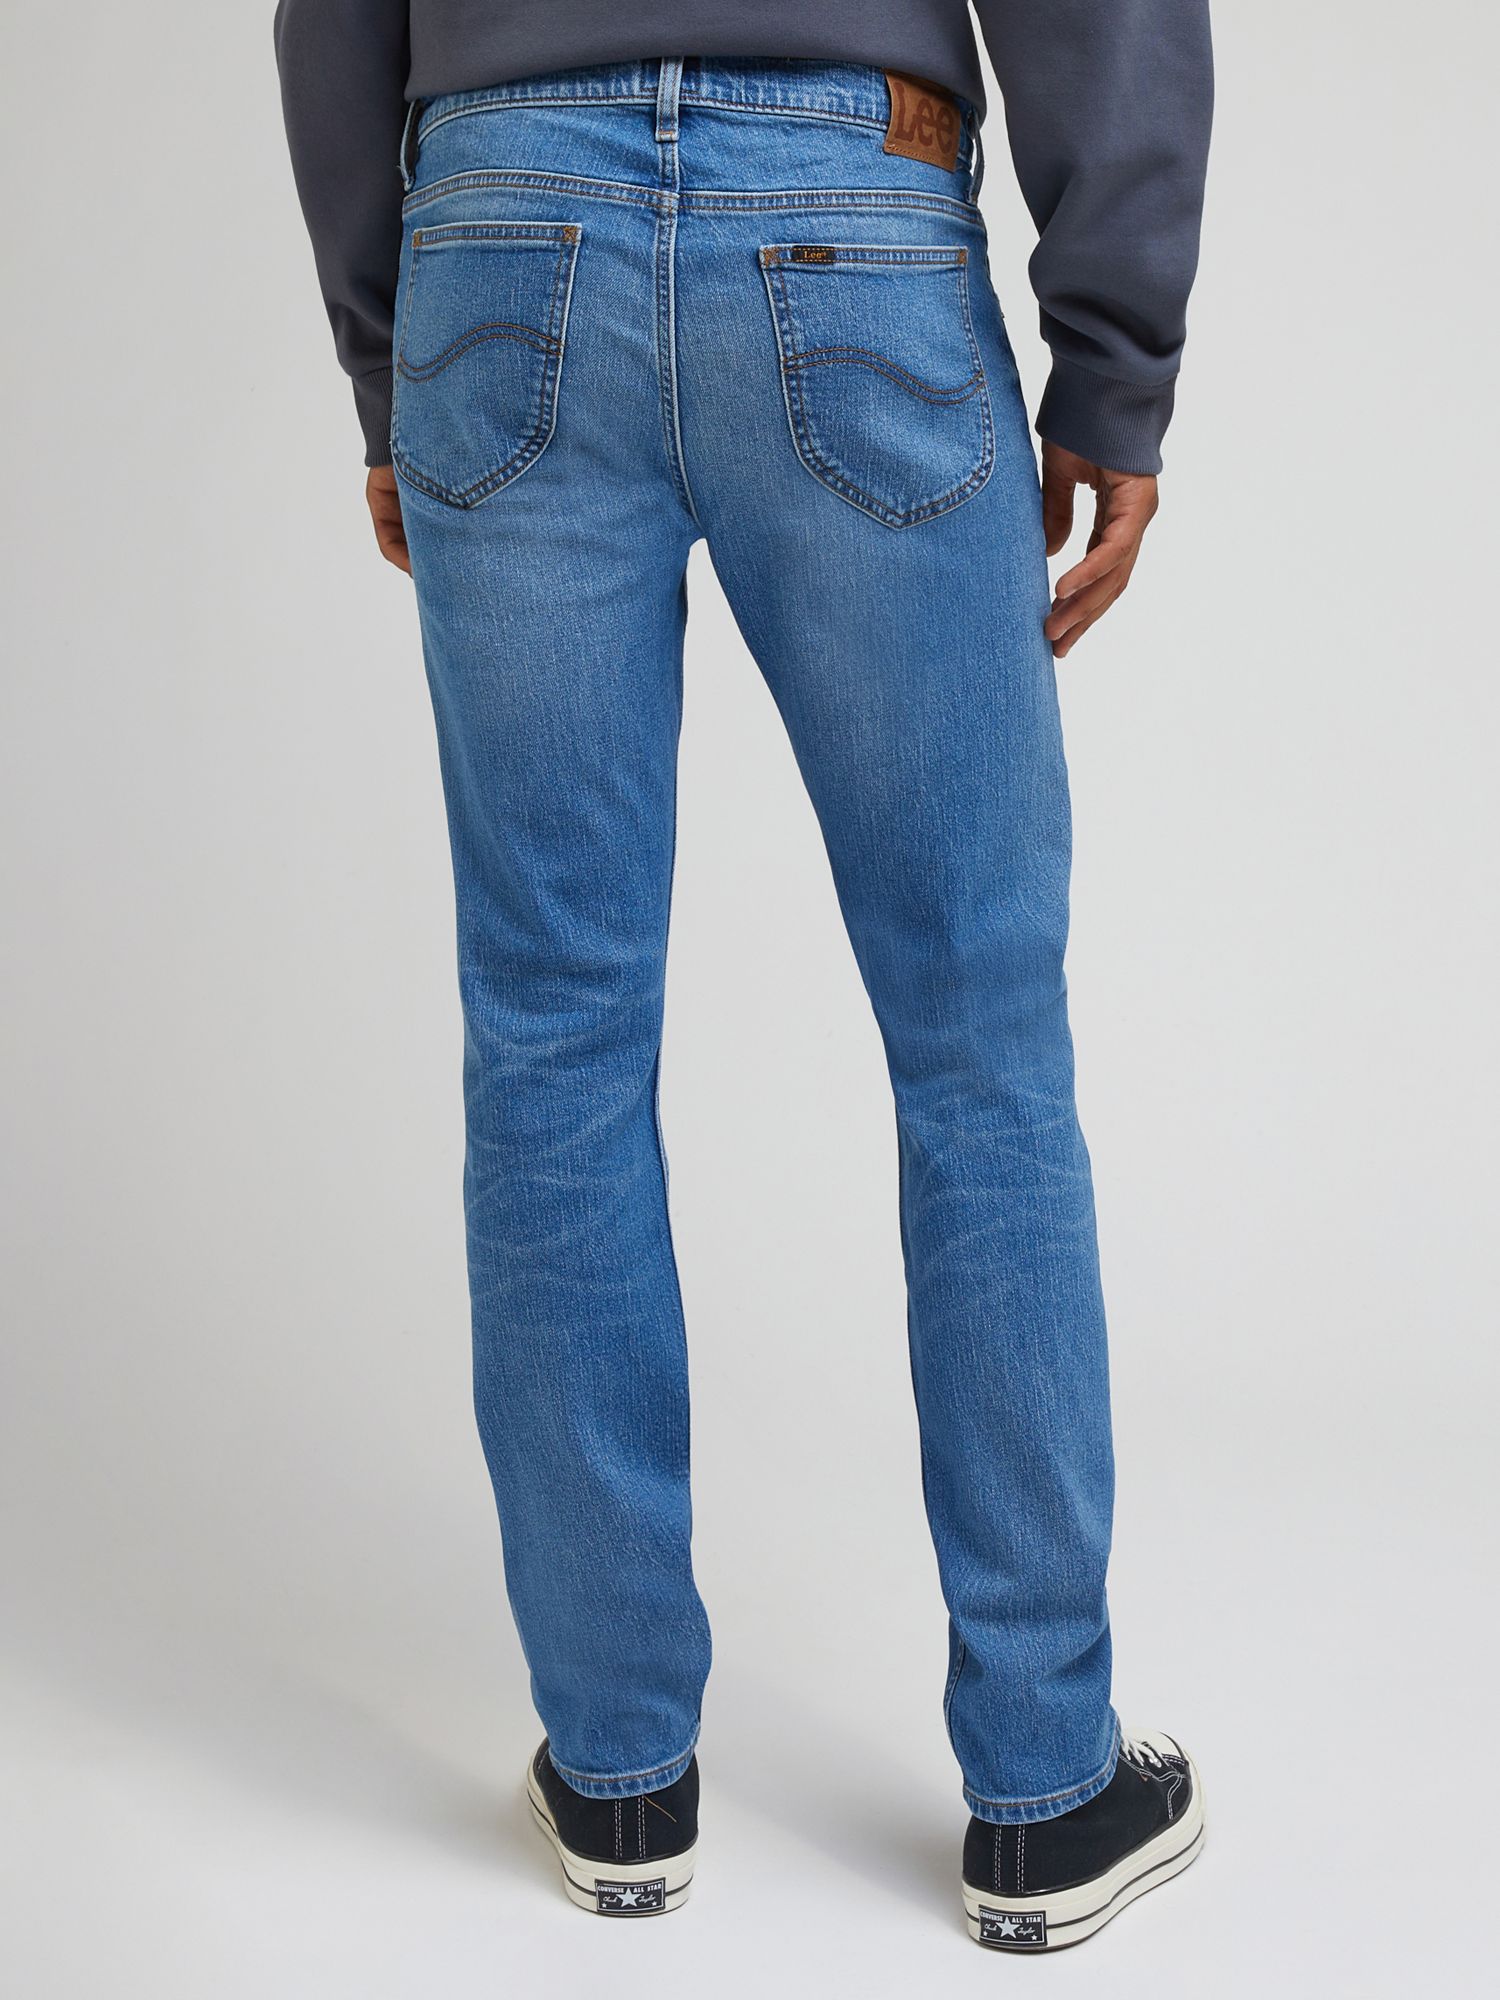 Lee Rider Slim Fit Denim Jeans, Indigo Vintage at John Lewis & Partners